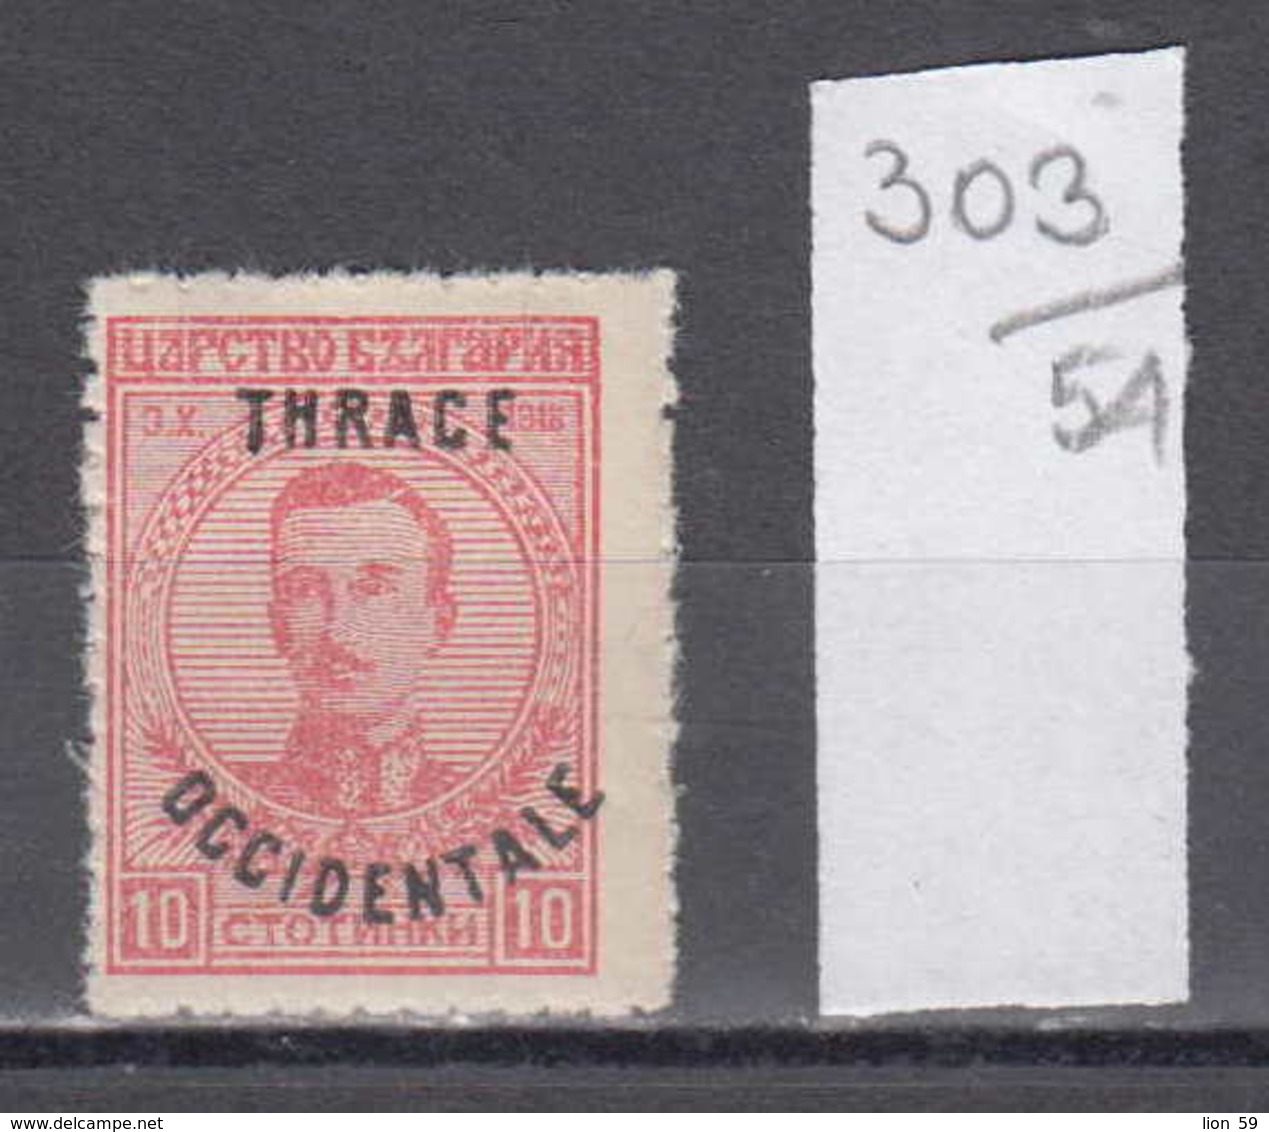 54K303 / Thrace Thrakien Trakia 1920 Michel Nr. 21 Overprint Bulgaria Bulgarie "TRACE OCCIDENTALE"  Greece Grece ** MNH - Thrace